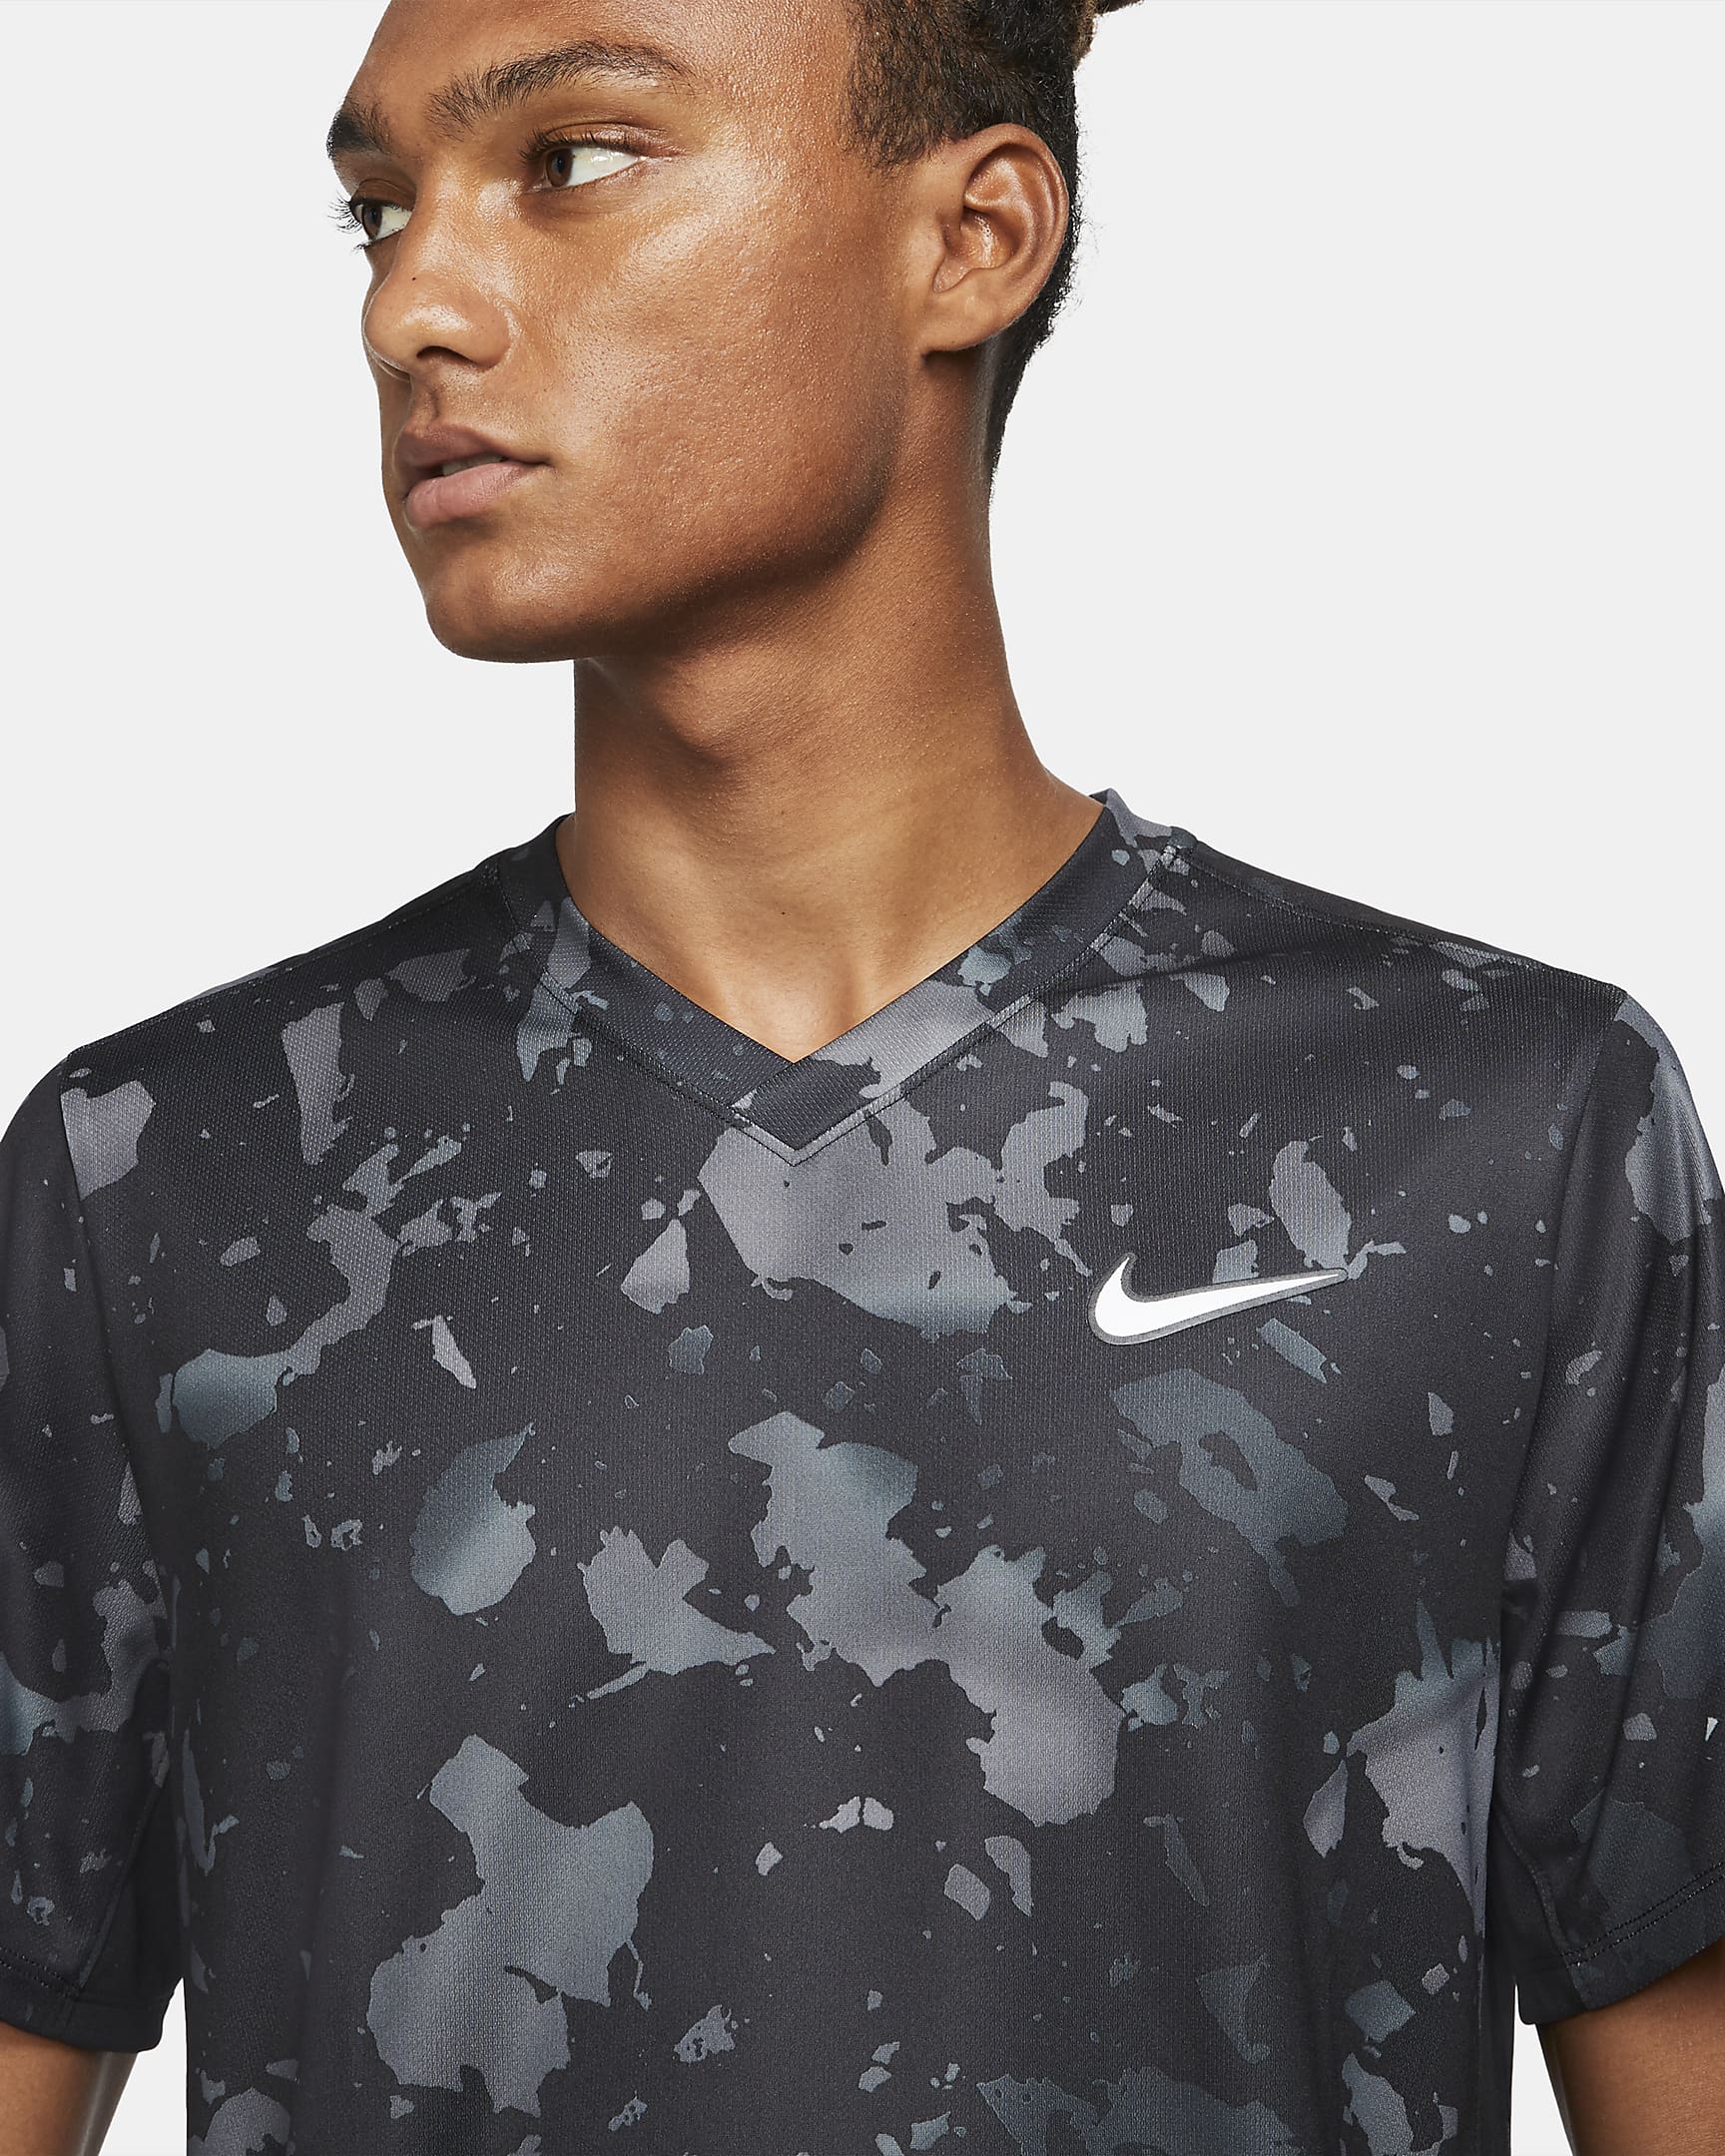 NikeCourt Dri-FIT Victory Men's Printed Tennis Top. Nike HR